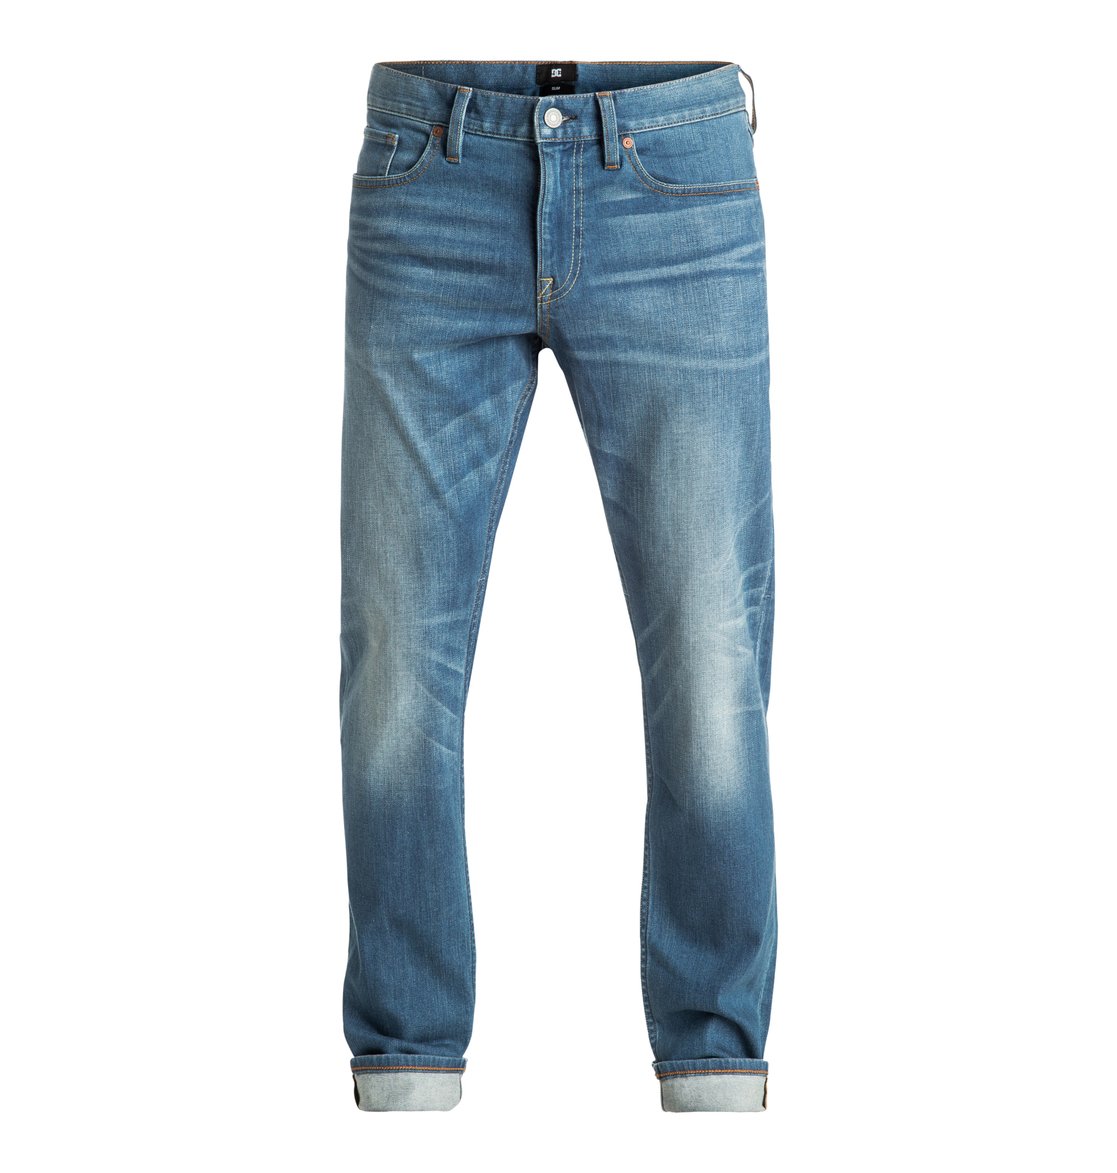 Washed Medium Indigo Bleach - Slim Fit Jeans EDYDP03283 | DC Shoes